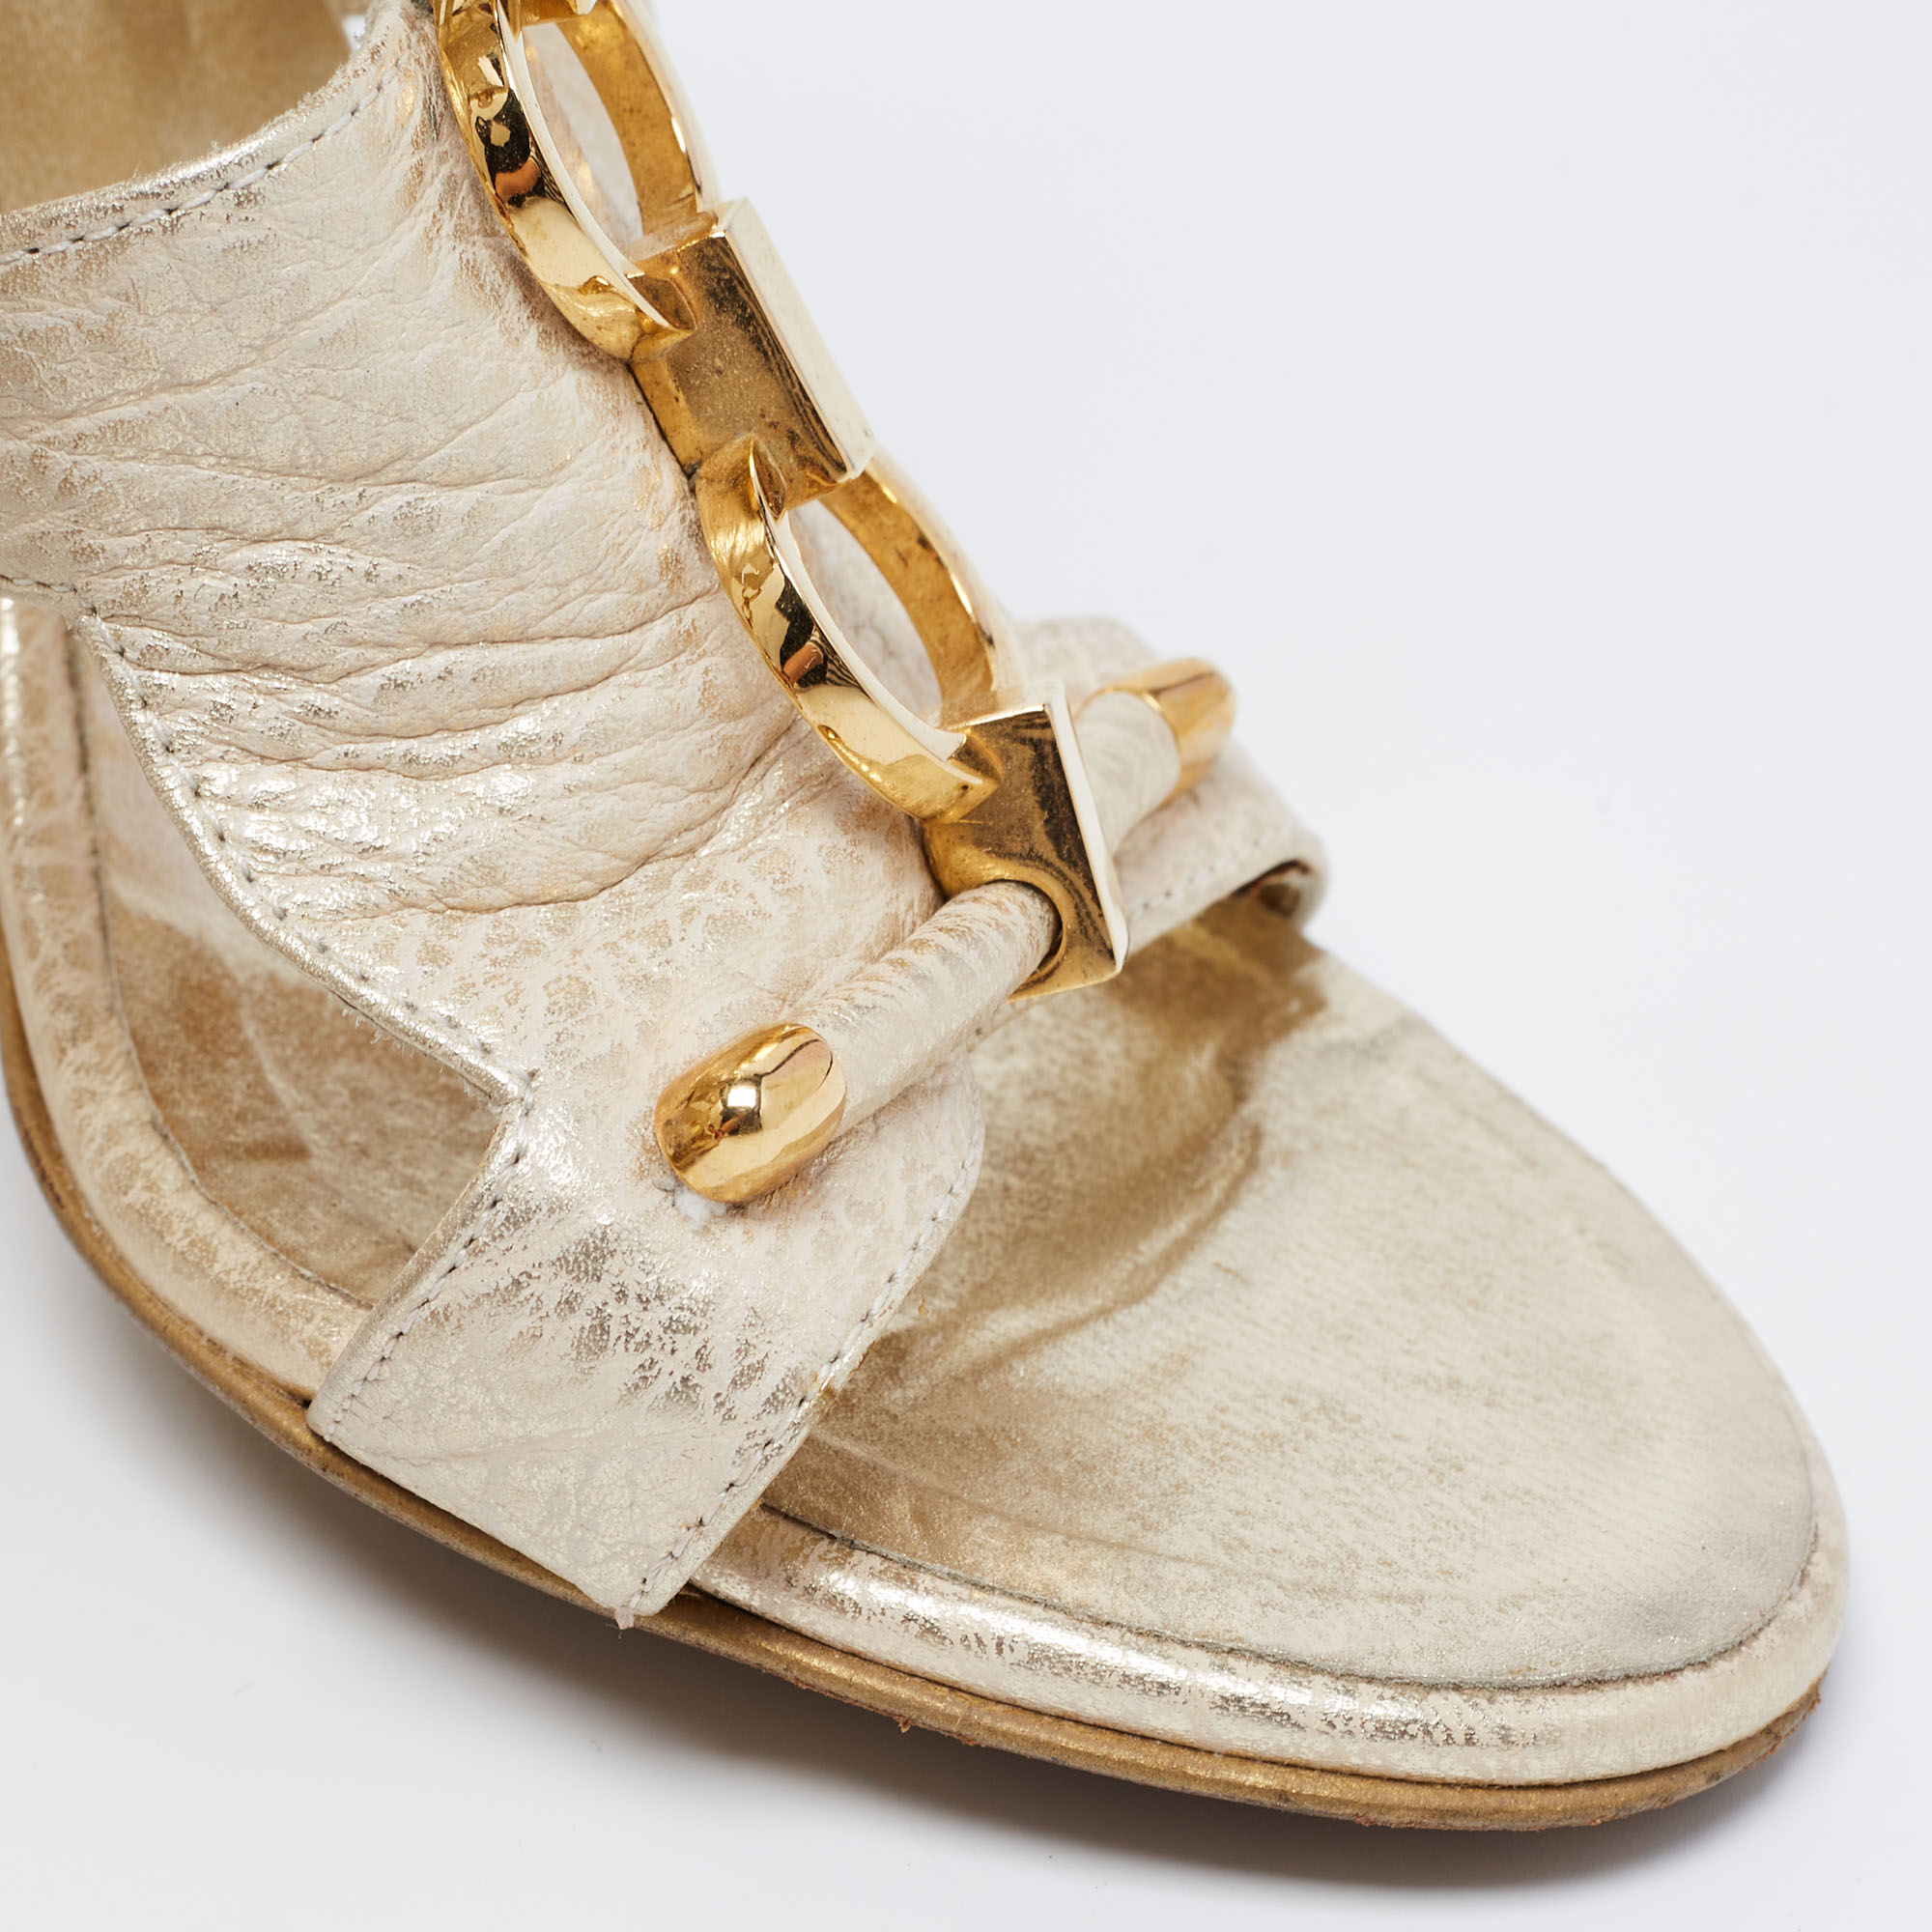 Roberto Cavalli Gold Leather Metal Embellished Ankle Strap Sandals Size 37.5